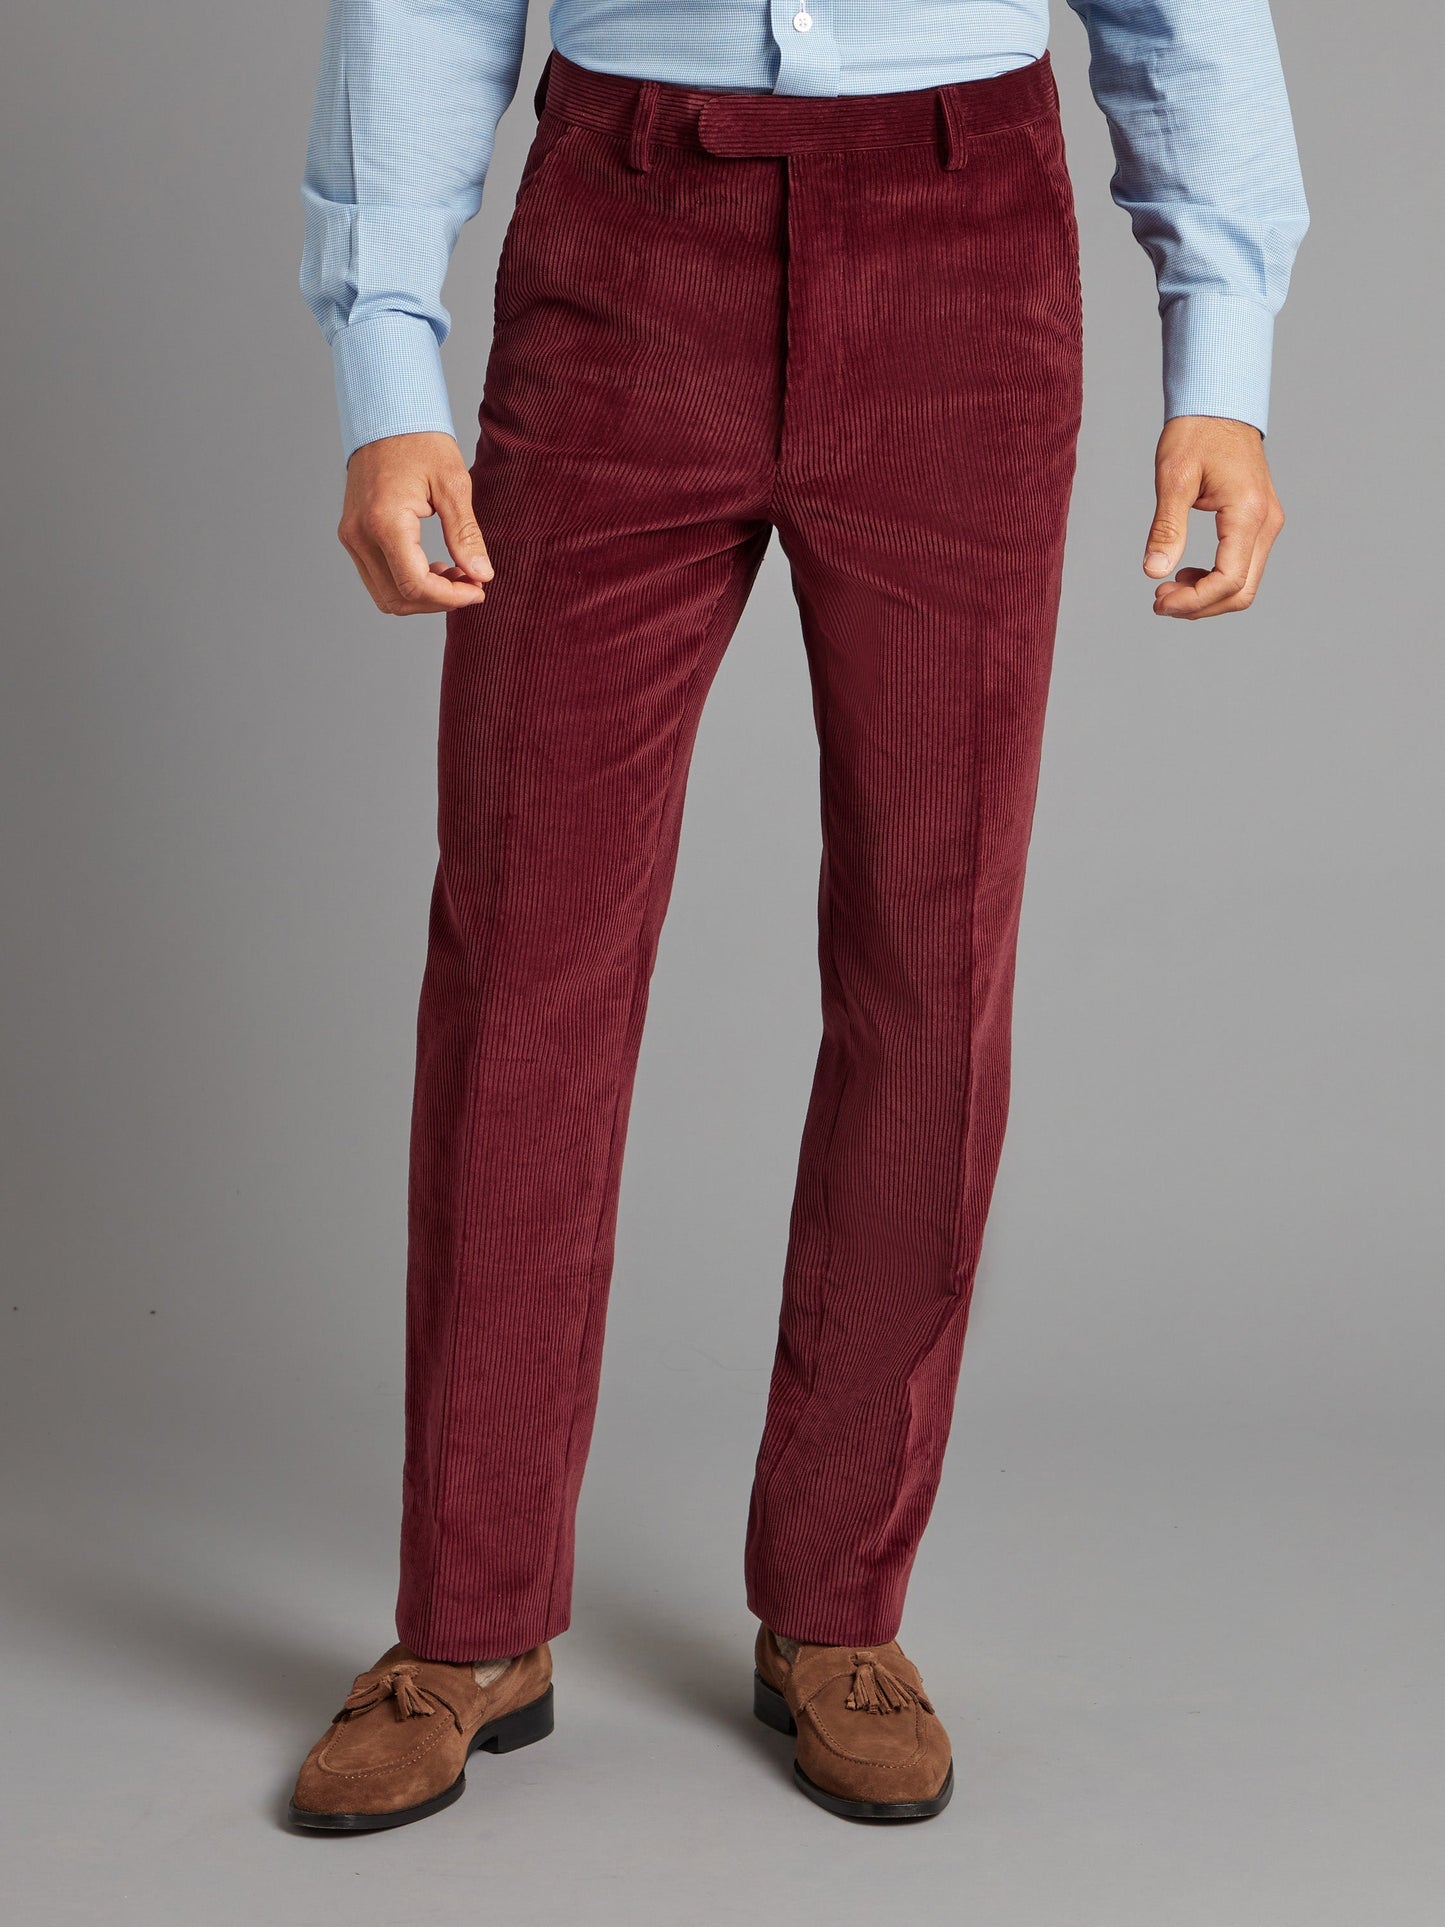 heavyweight corduroy trousers maroon 1